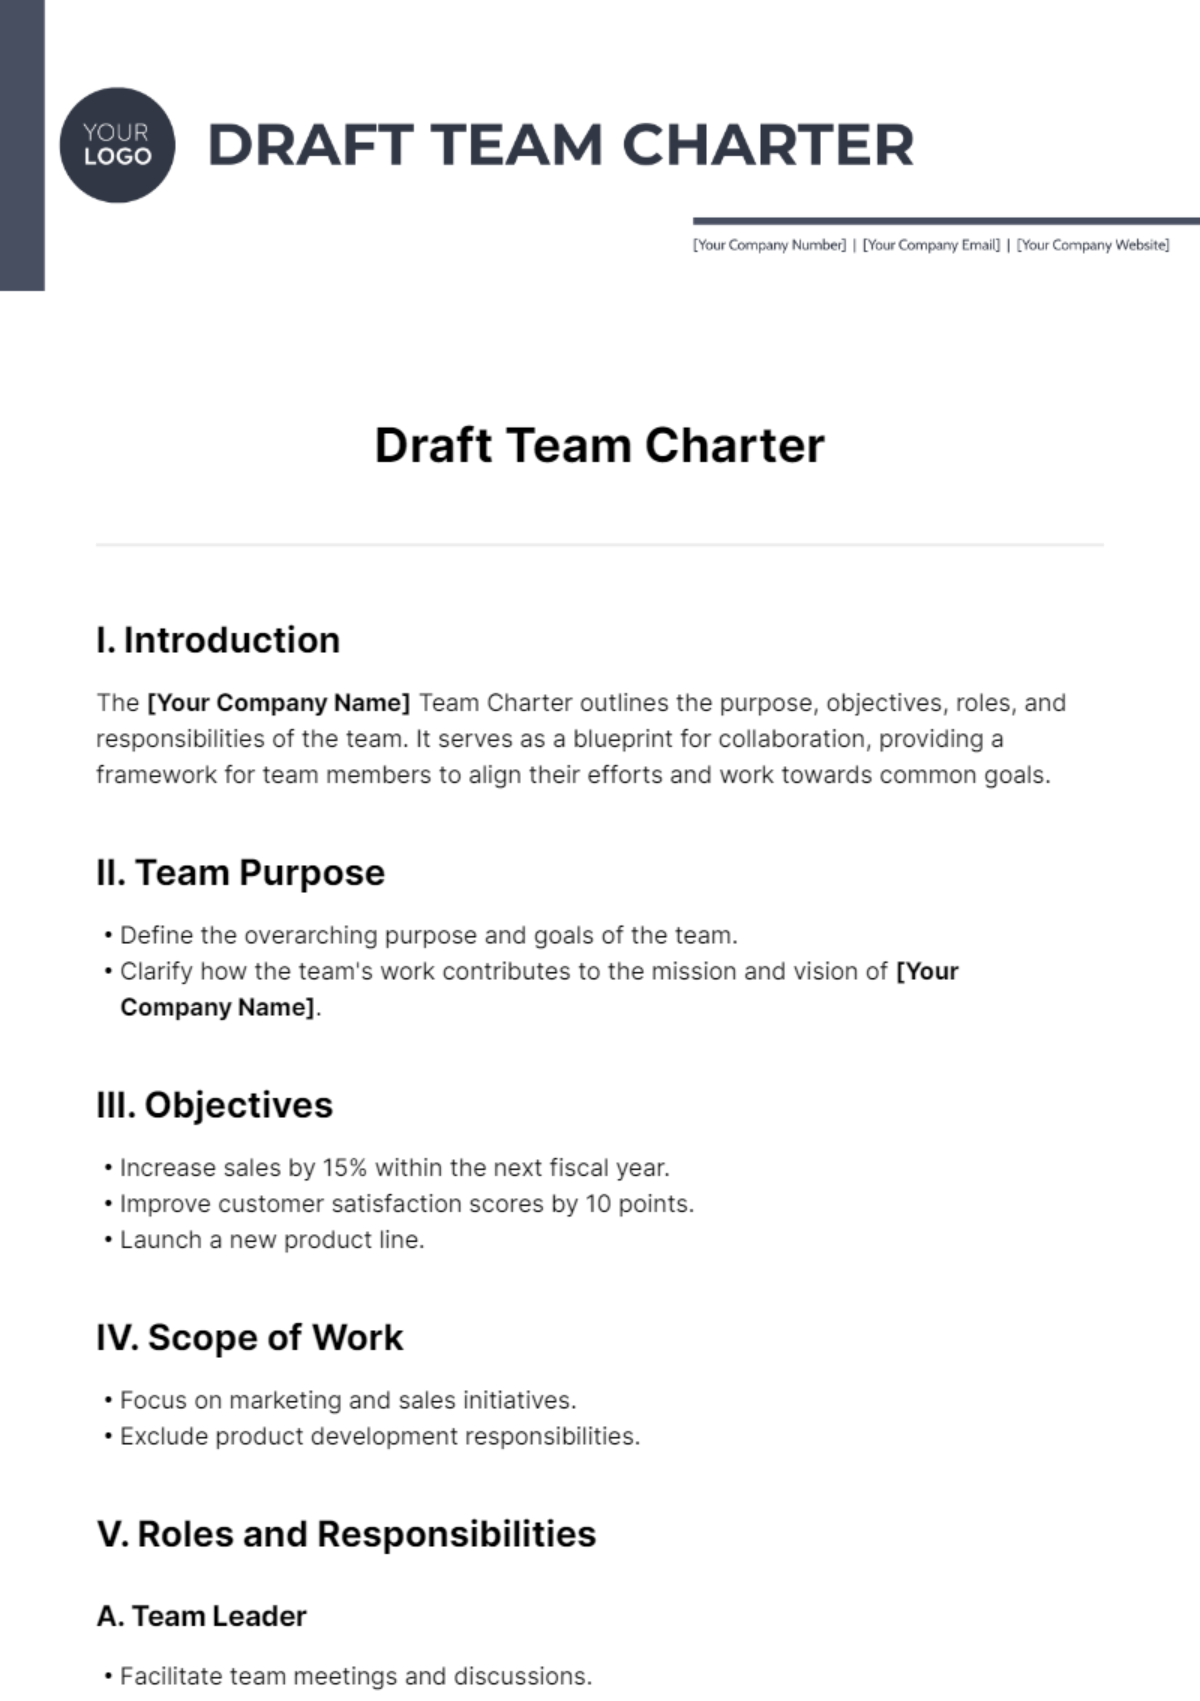 Free Draft Team Charter Template